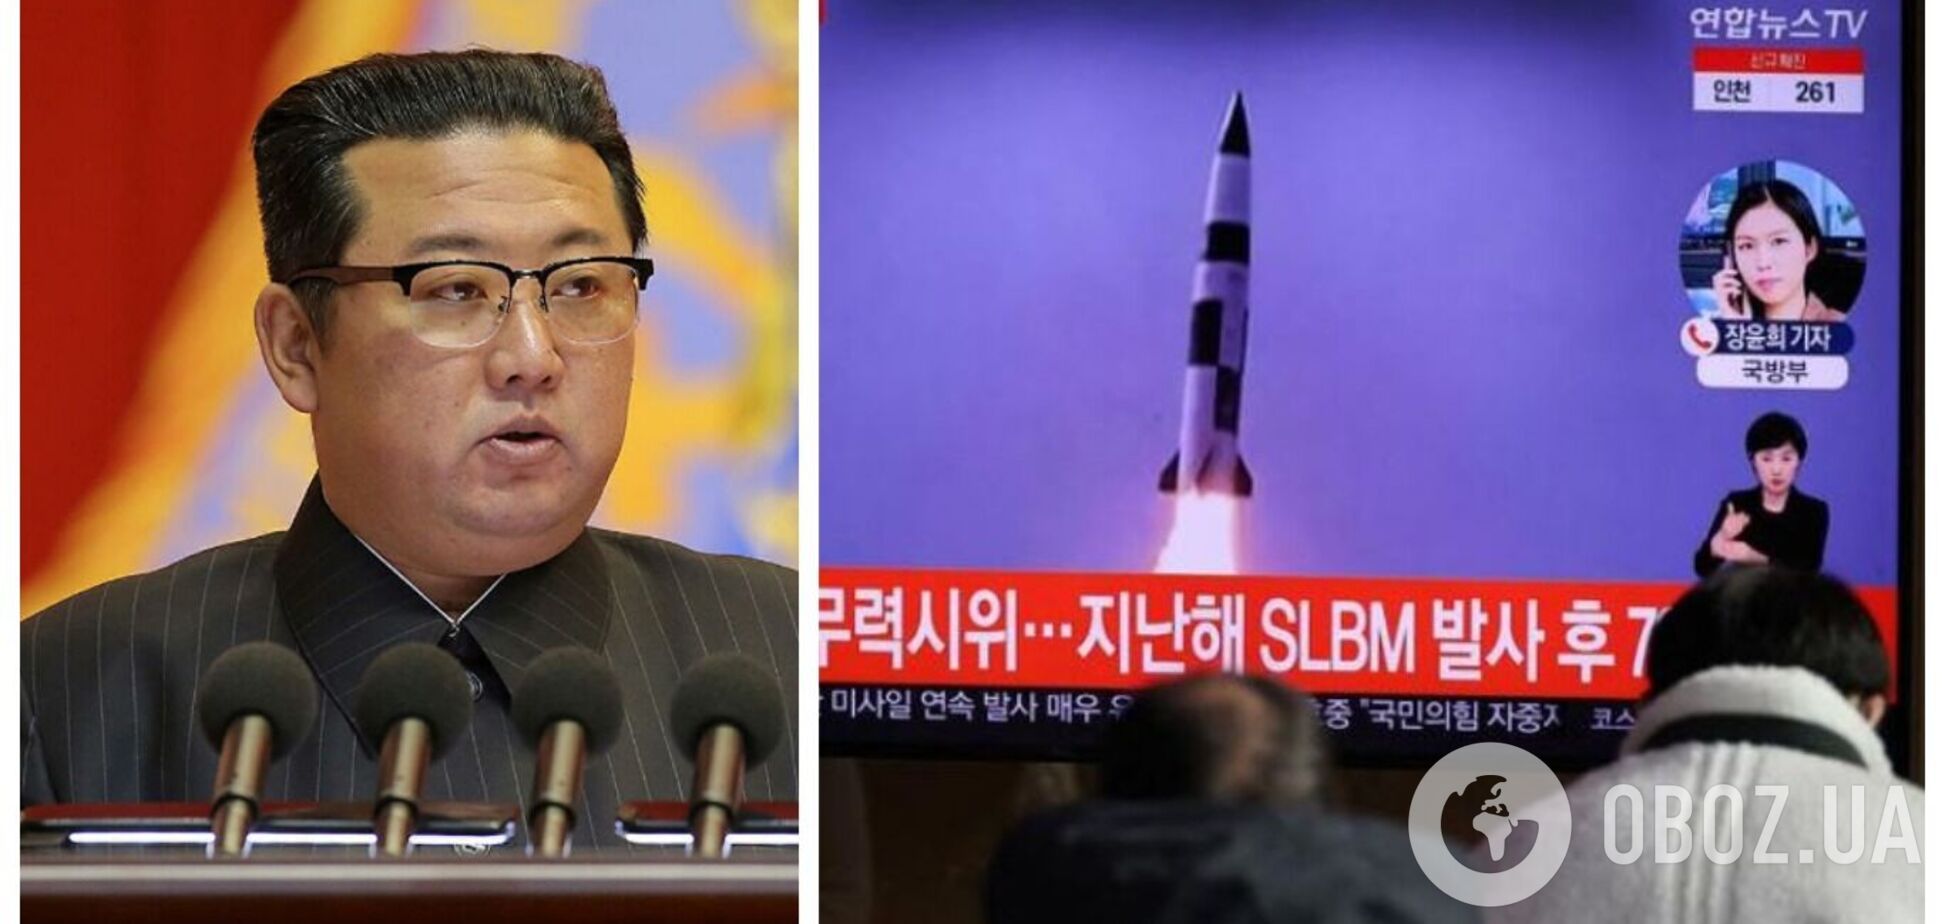 КНДР снова запустила три баллистических ракеты: США и Южная Корея отреагировали